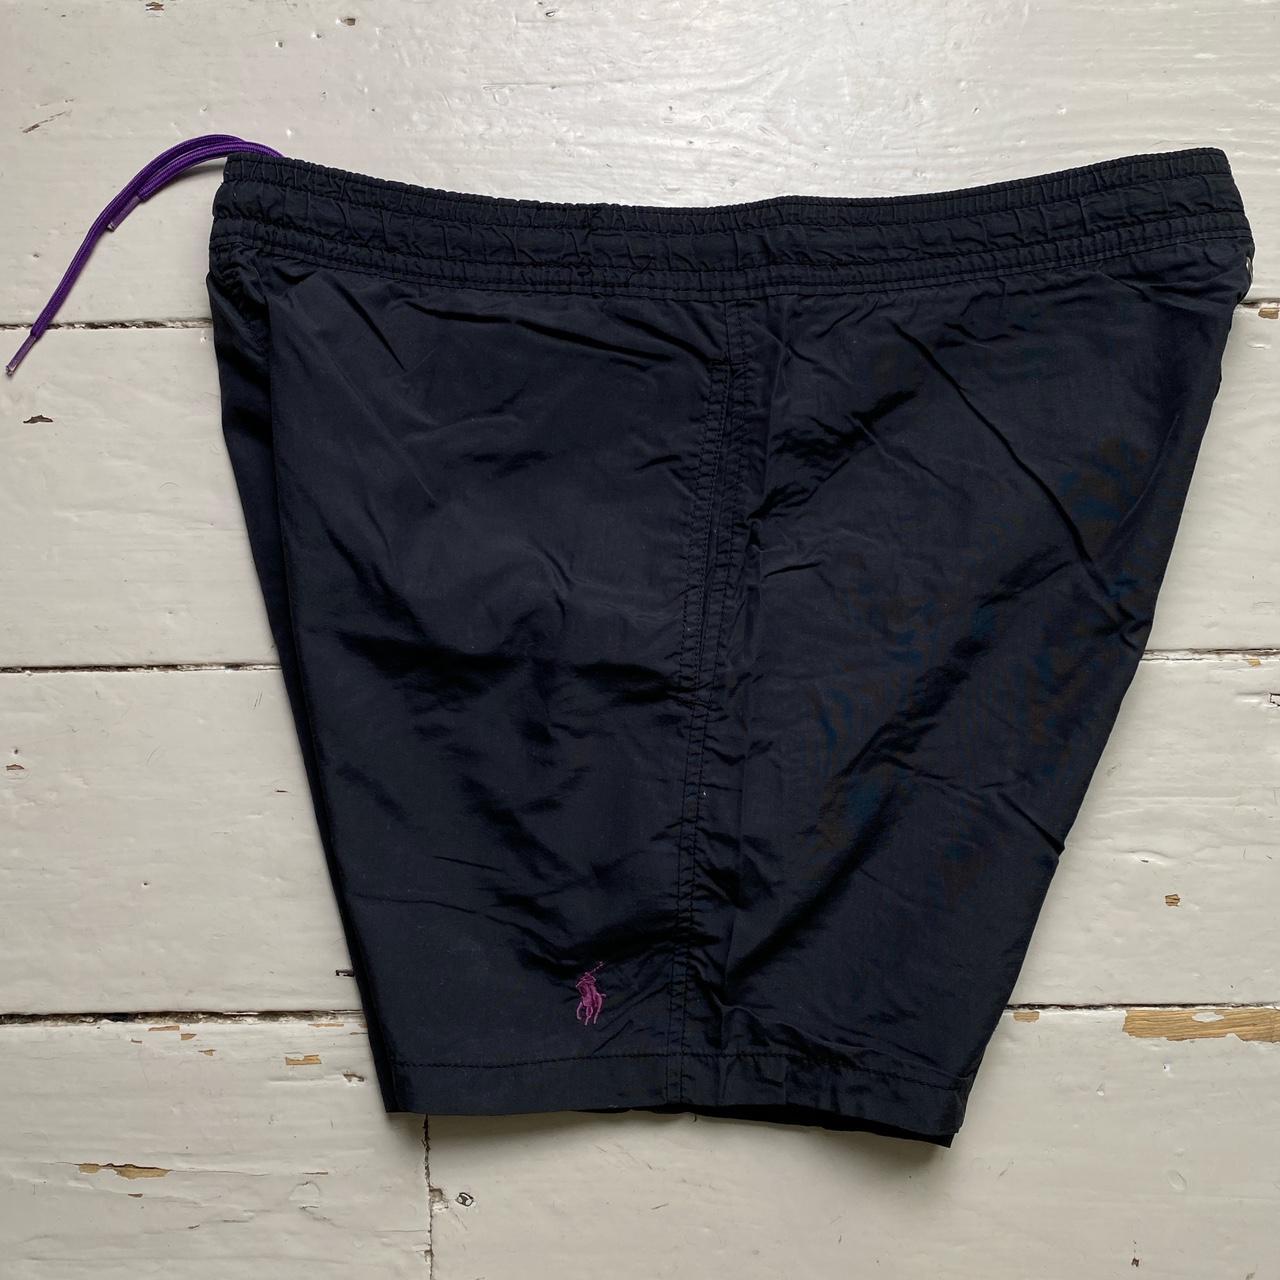 Polo Ralph Lauren Black and Purple Swim Shorts